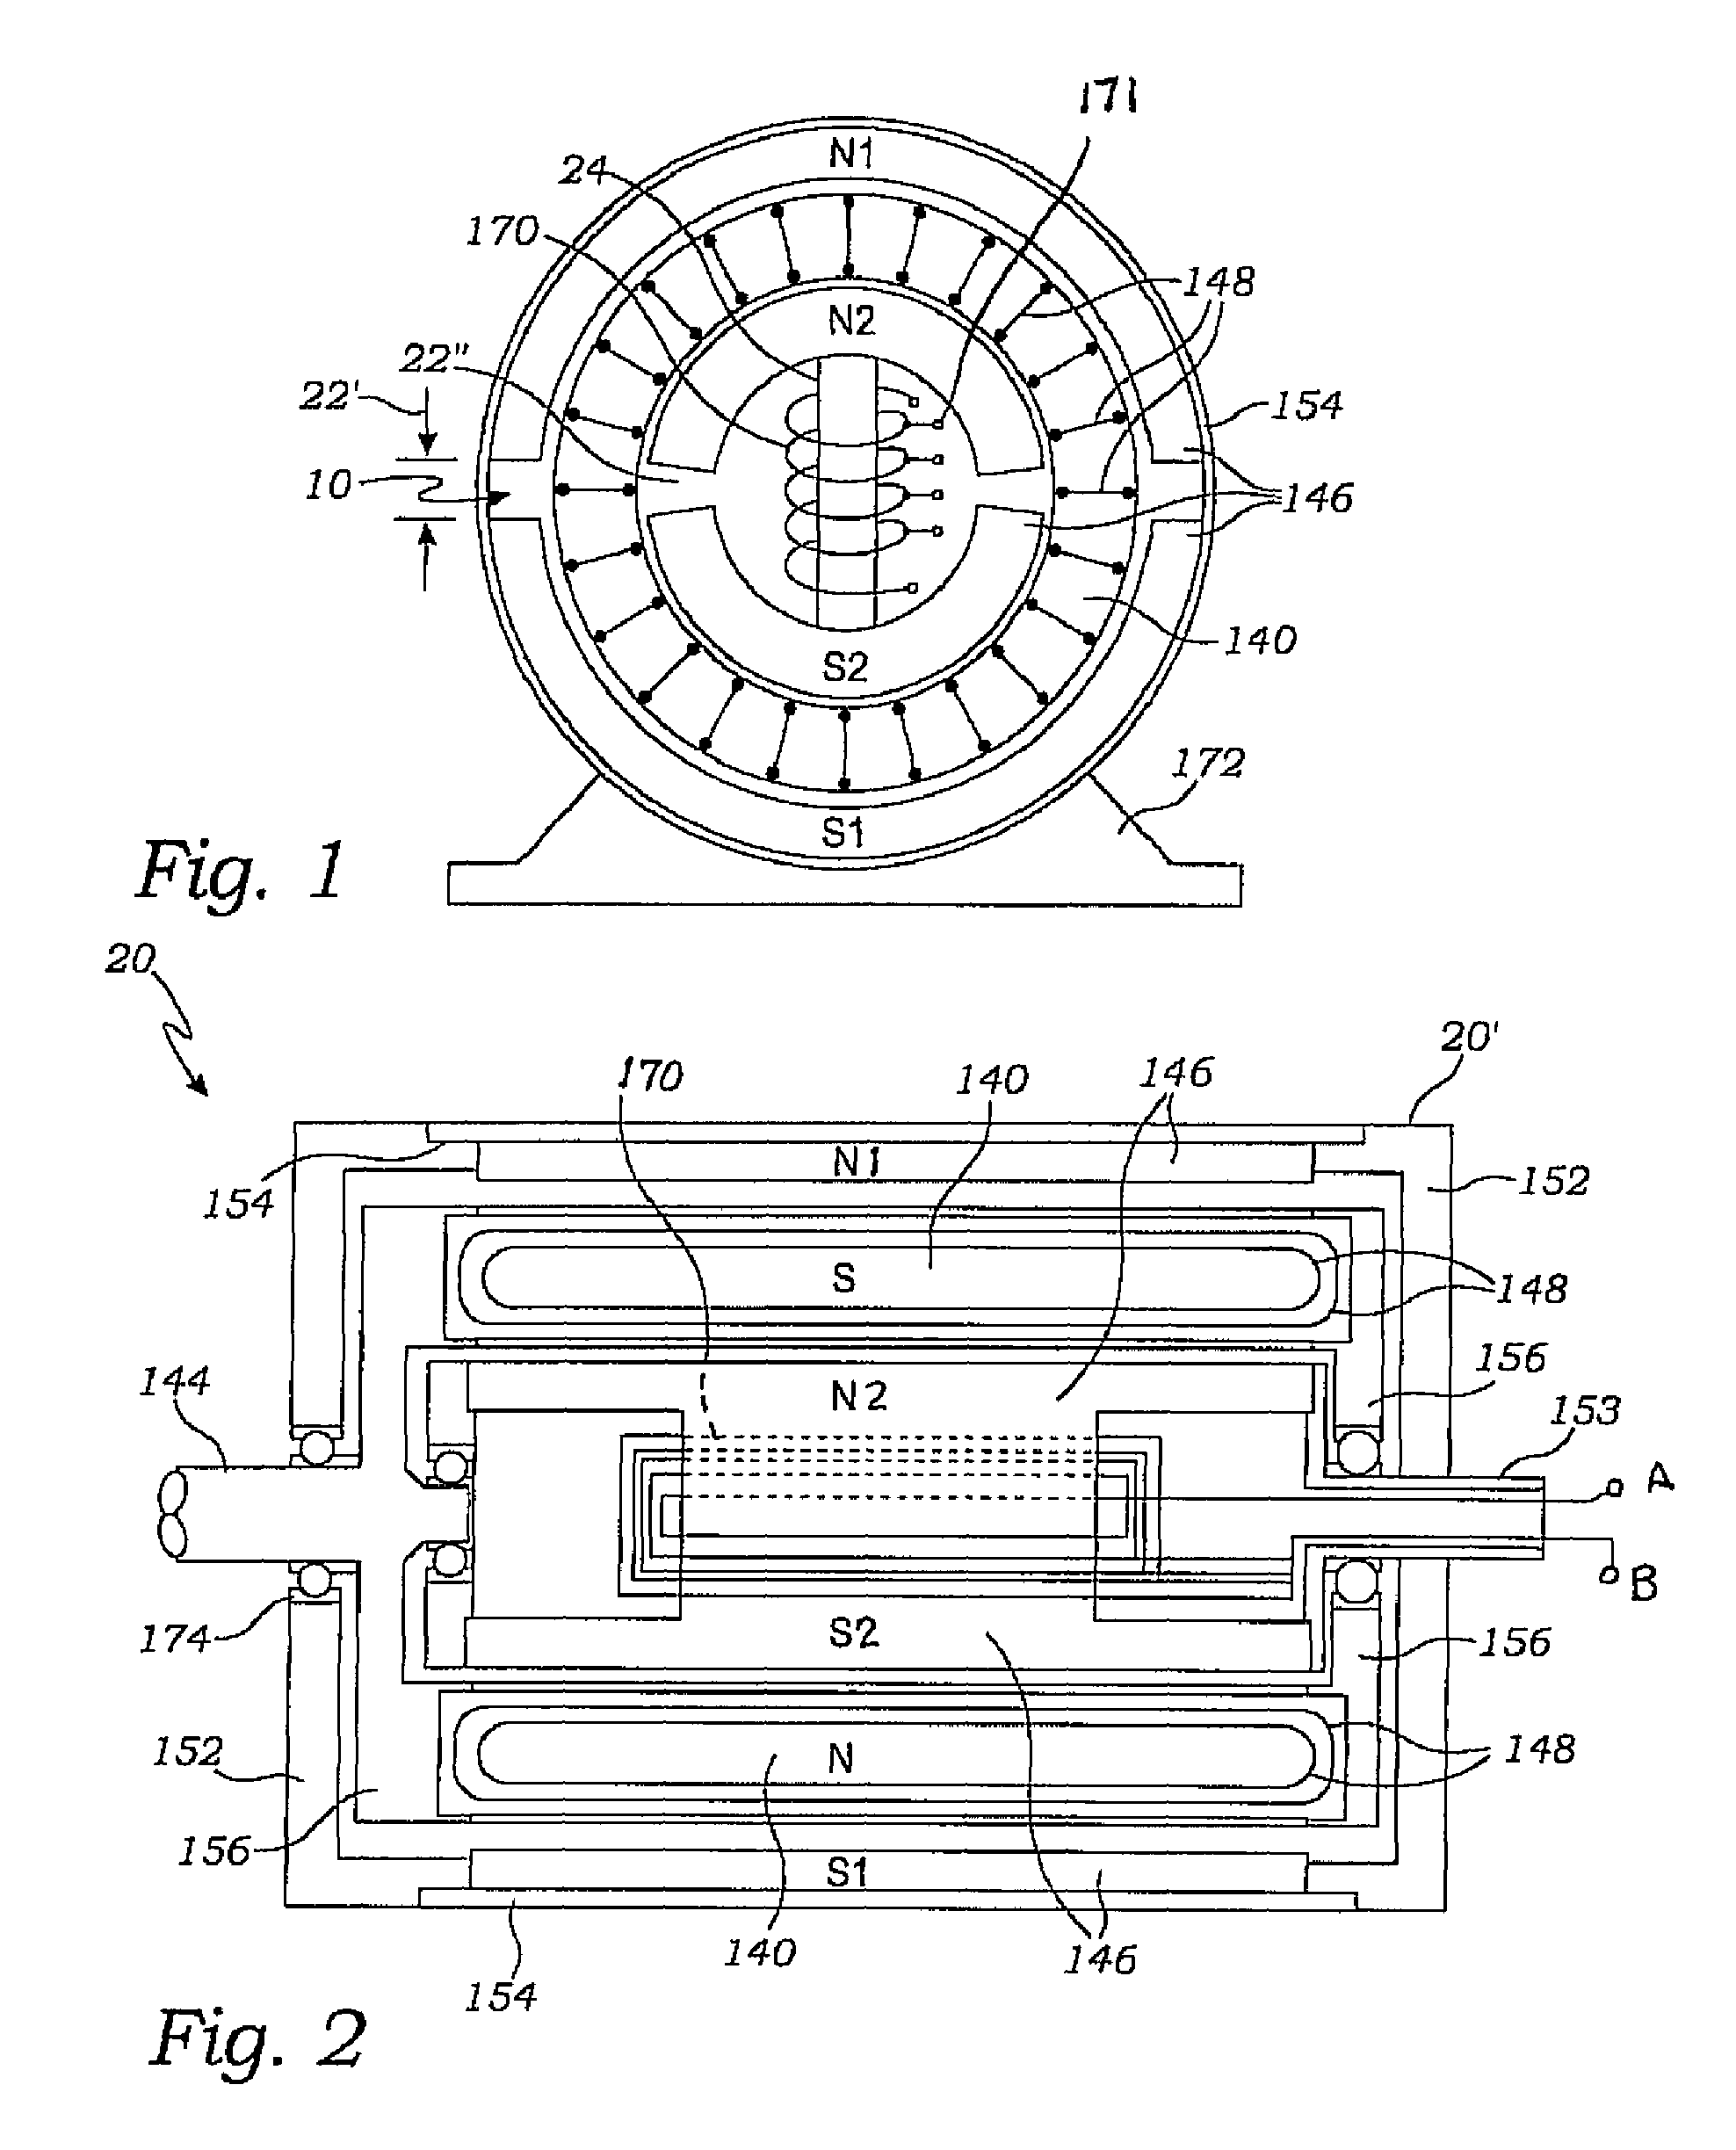 DC induction electric motor-generator